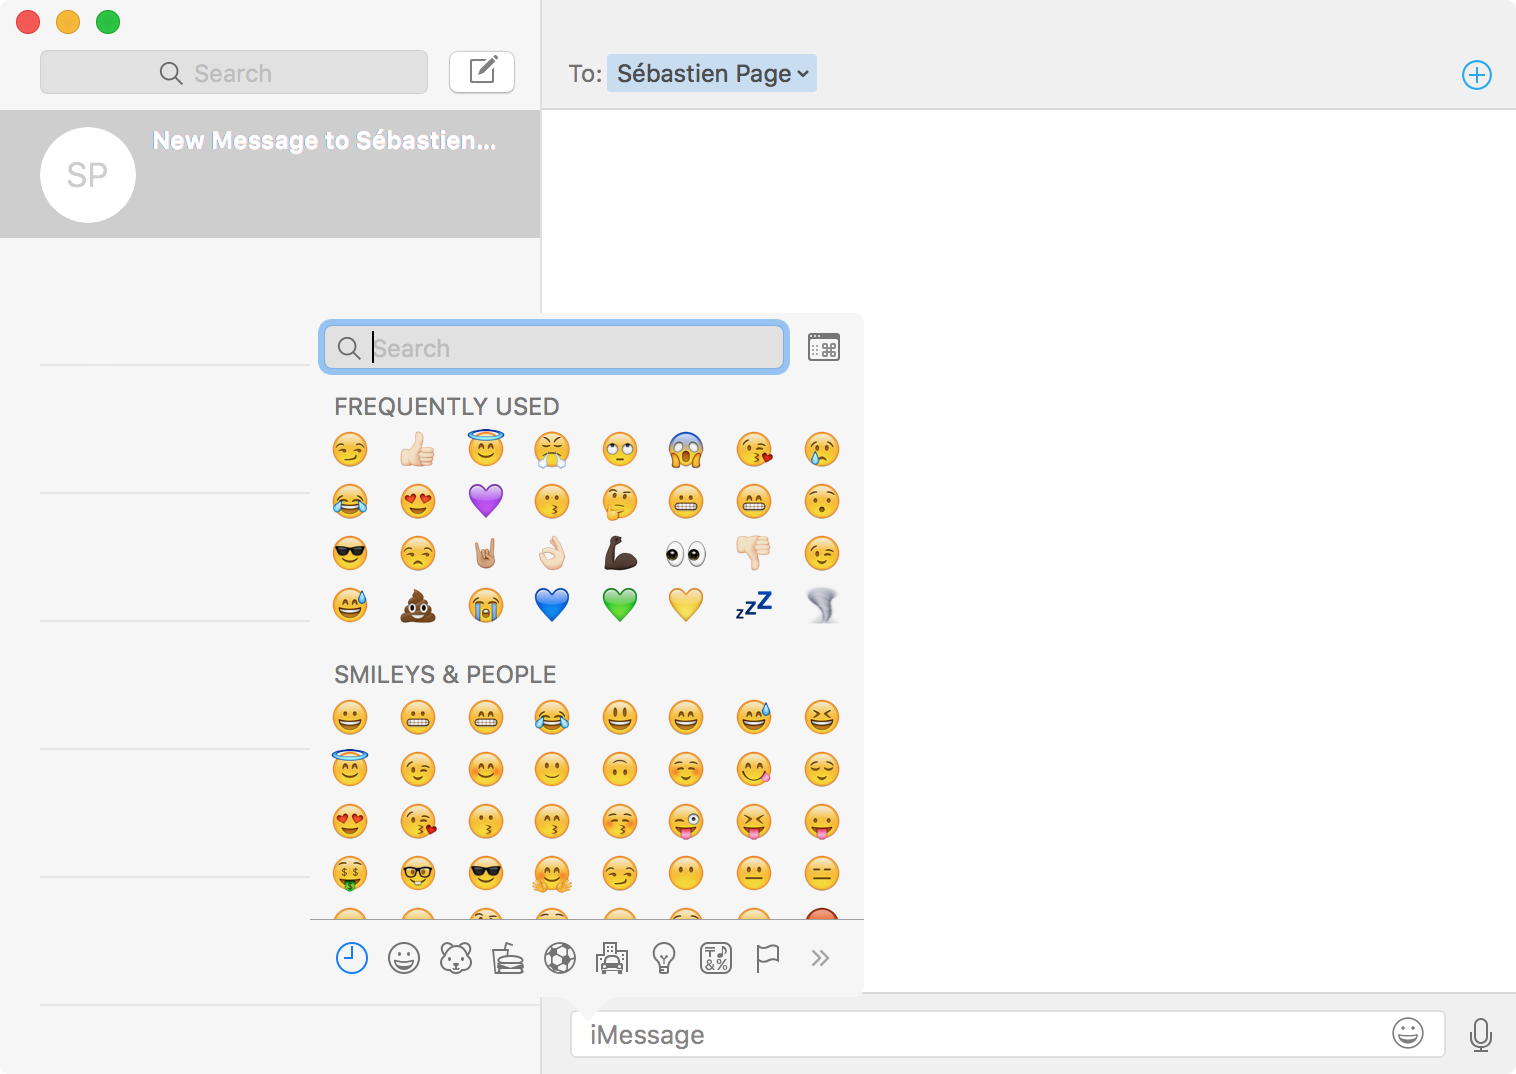 download emoji keyboard for mac